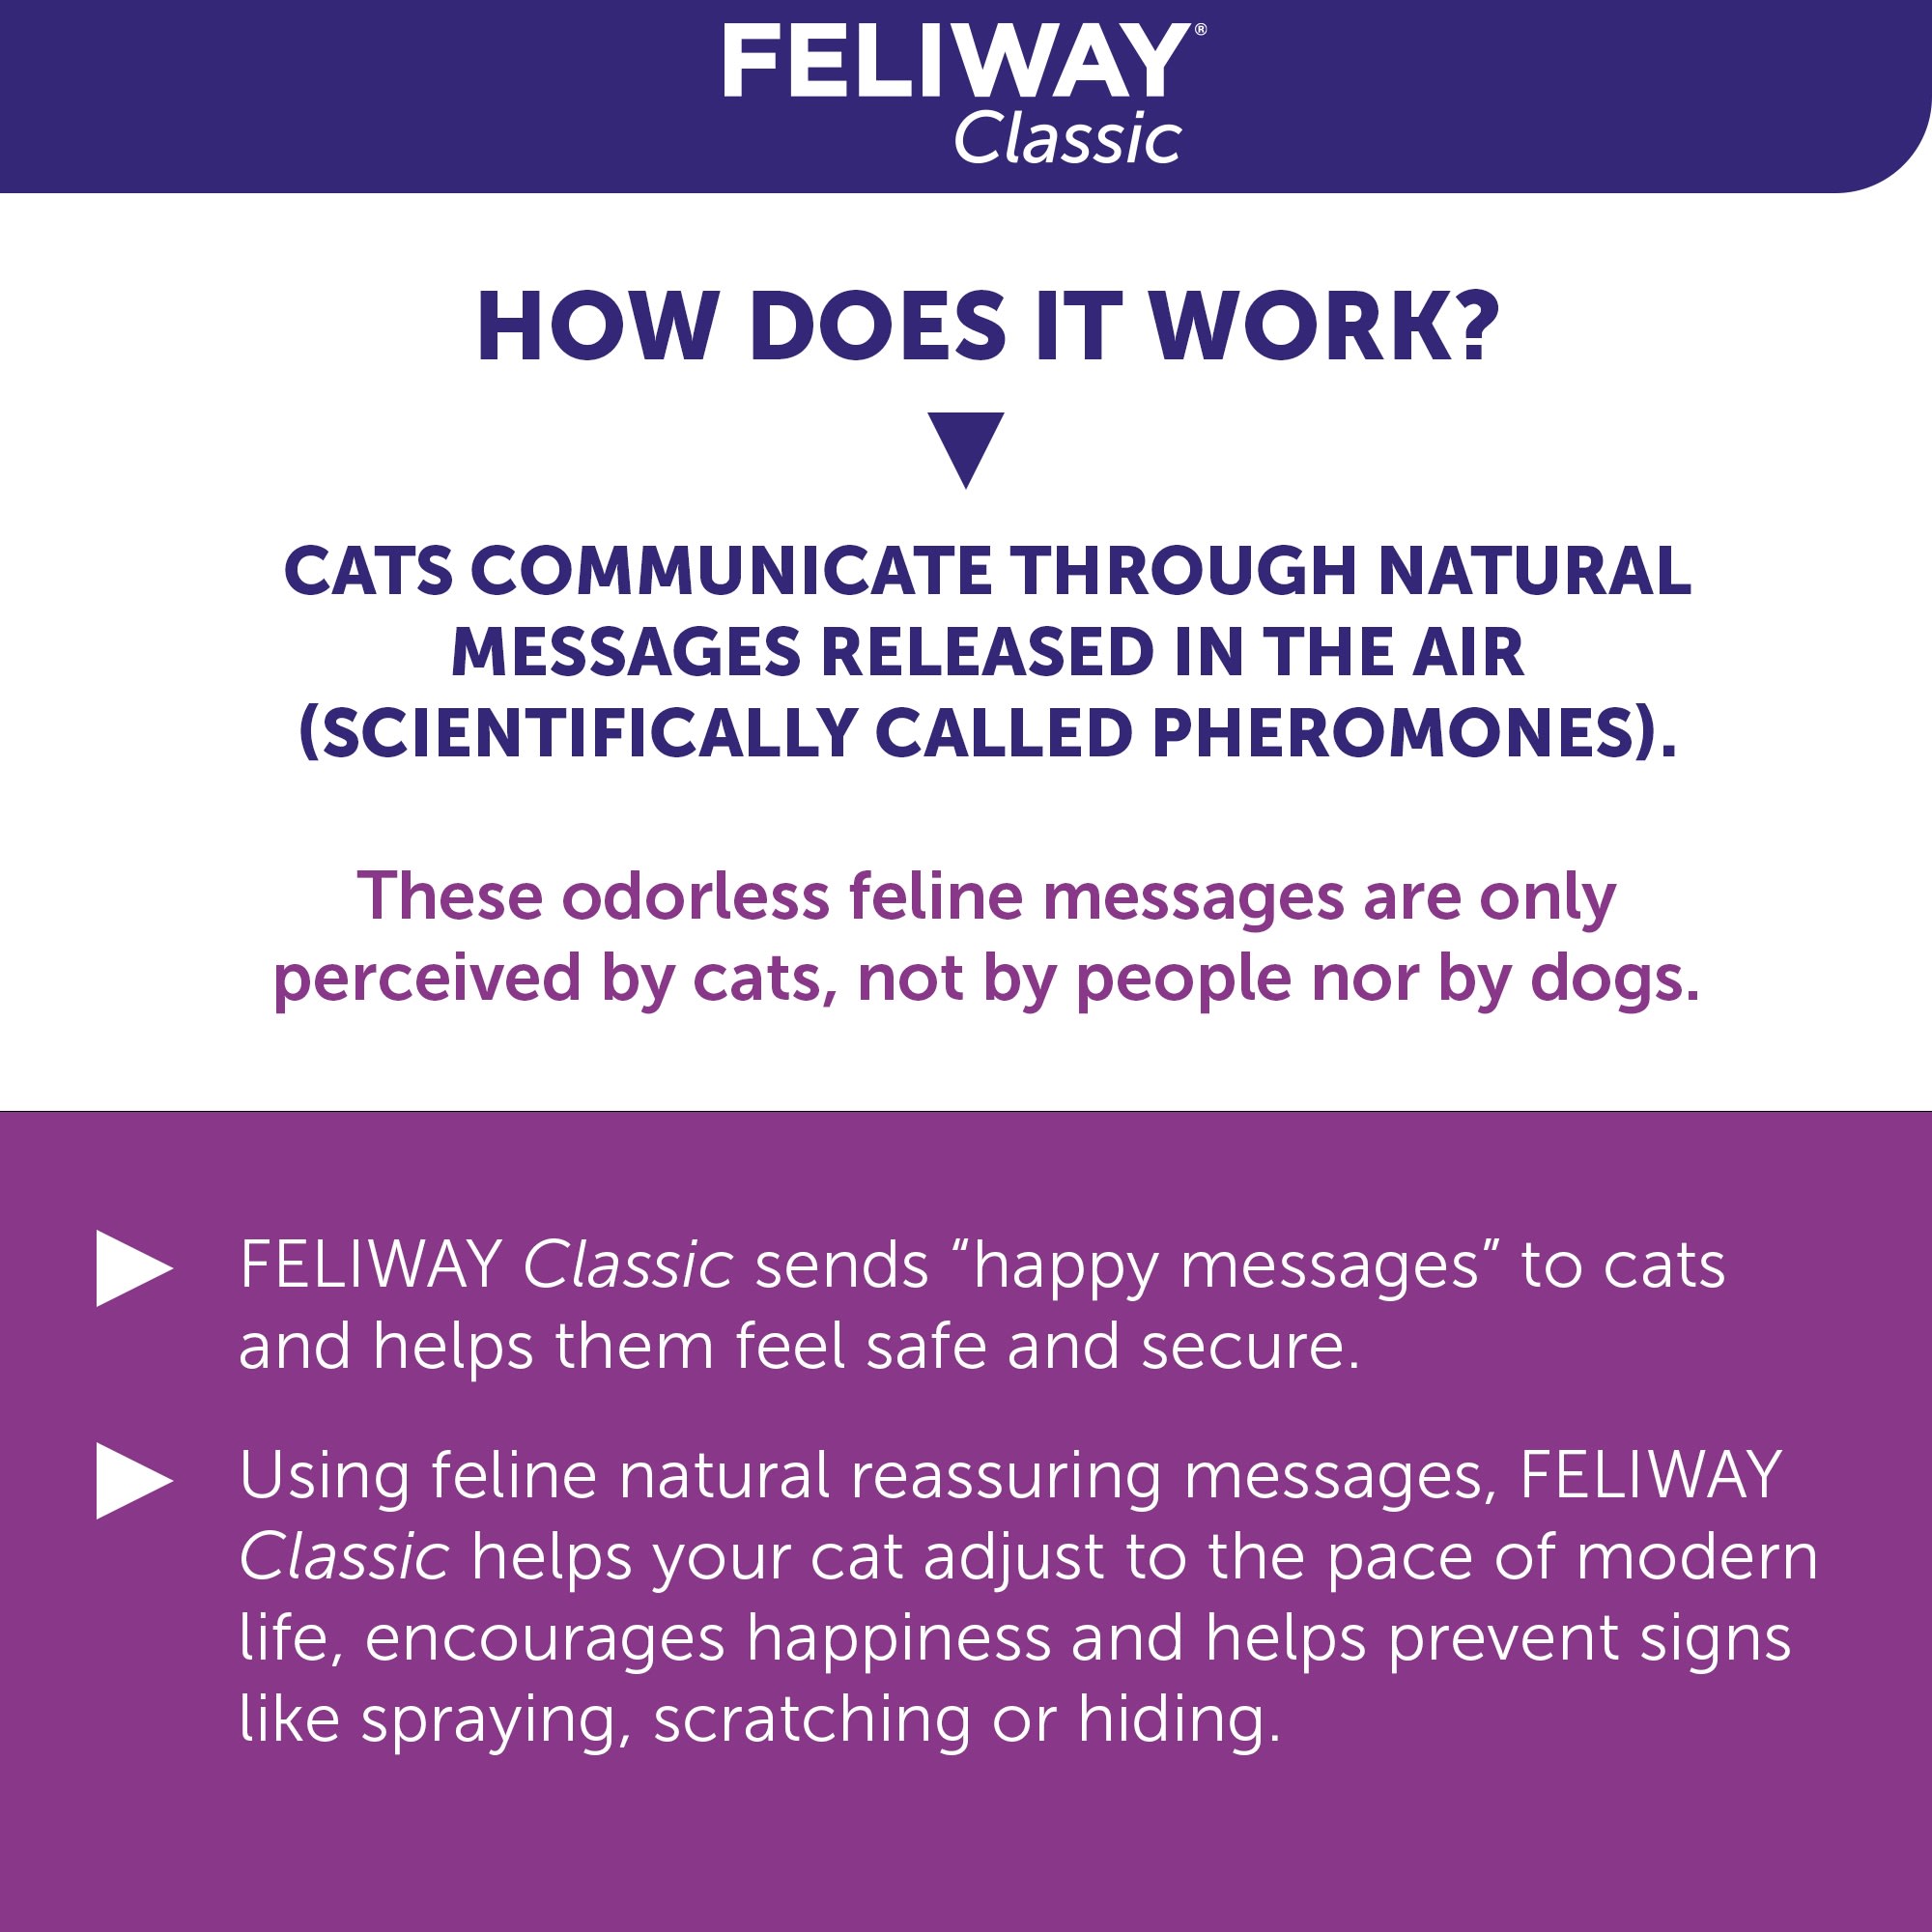 Buy Feliway classic travel spray for cats 20 ml Ceva Sac